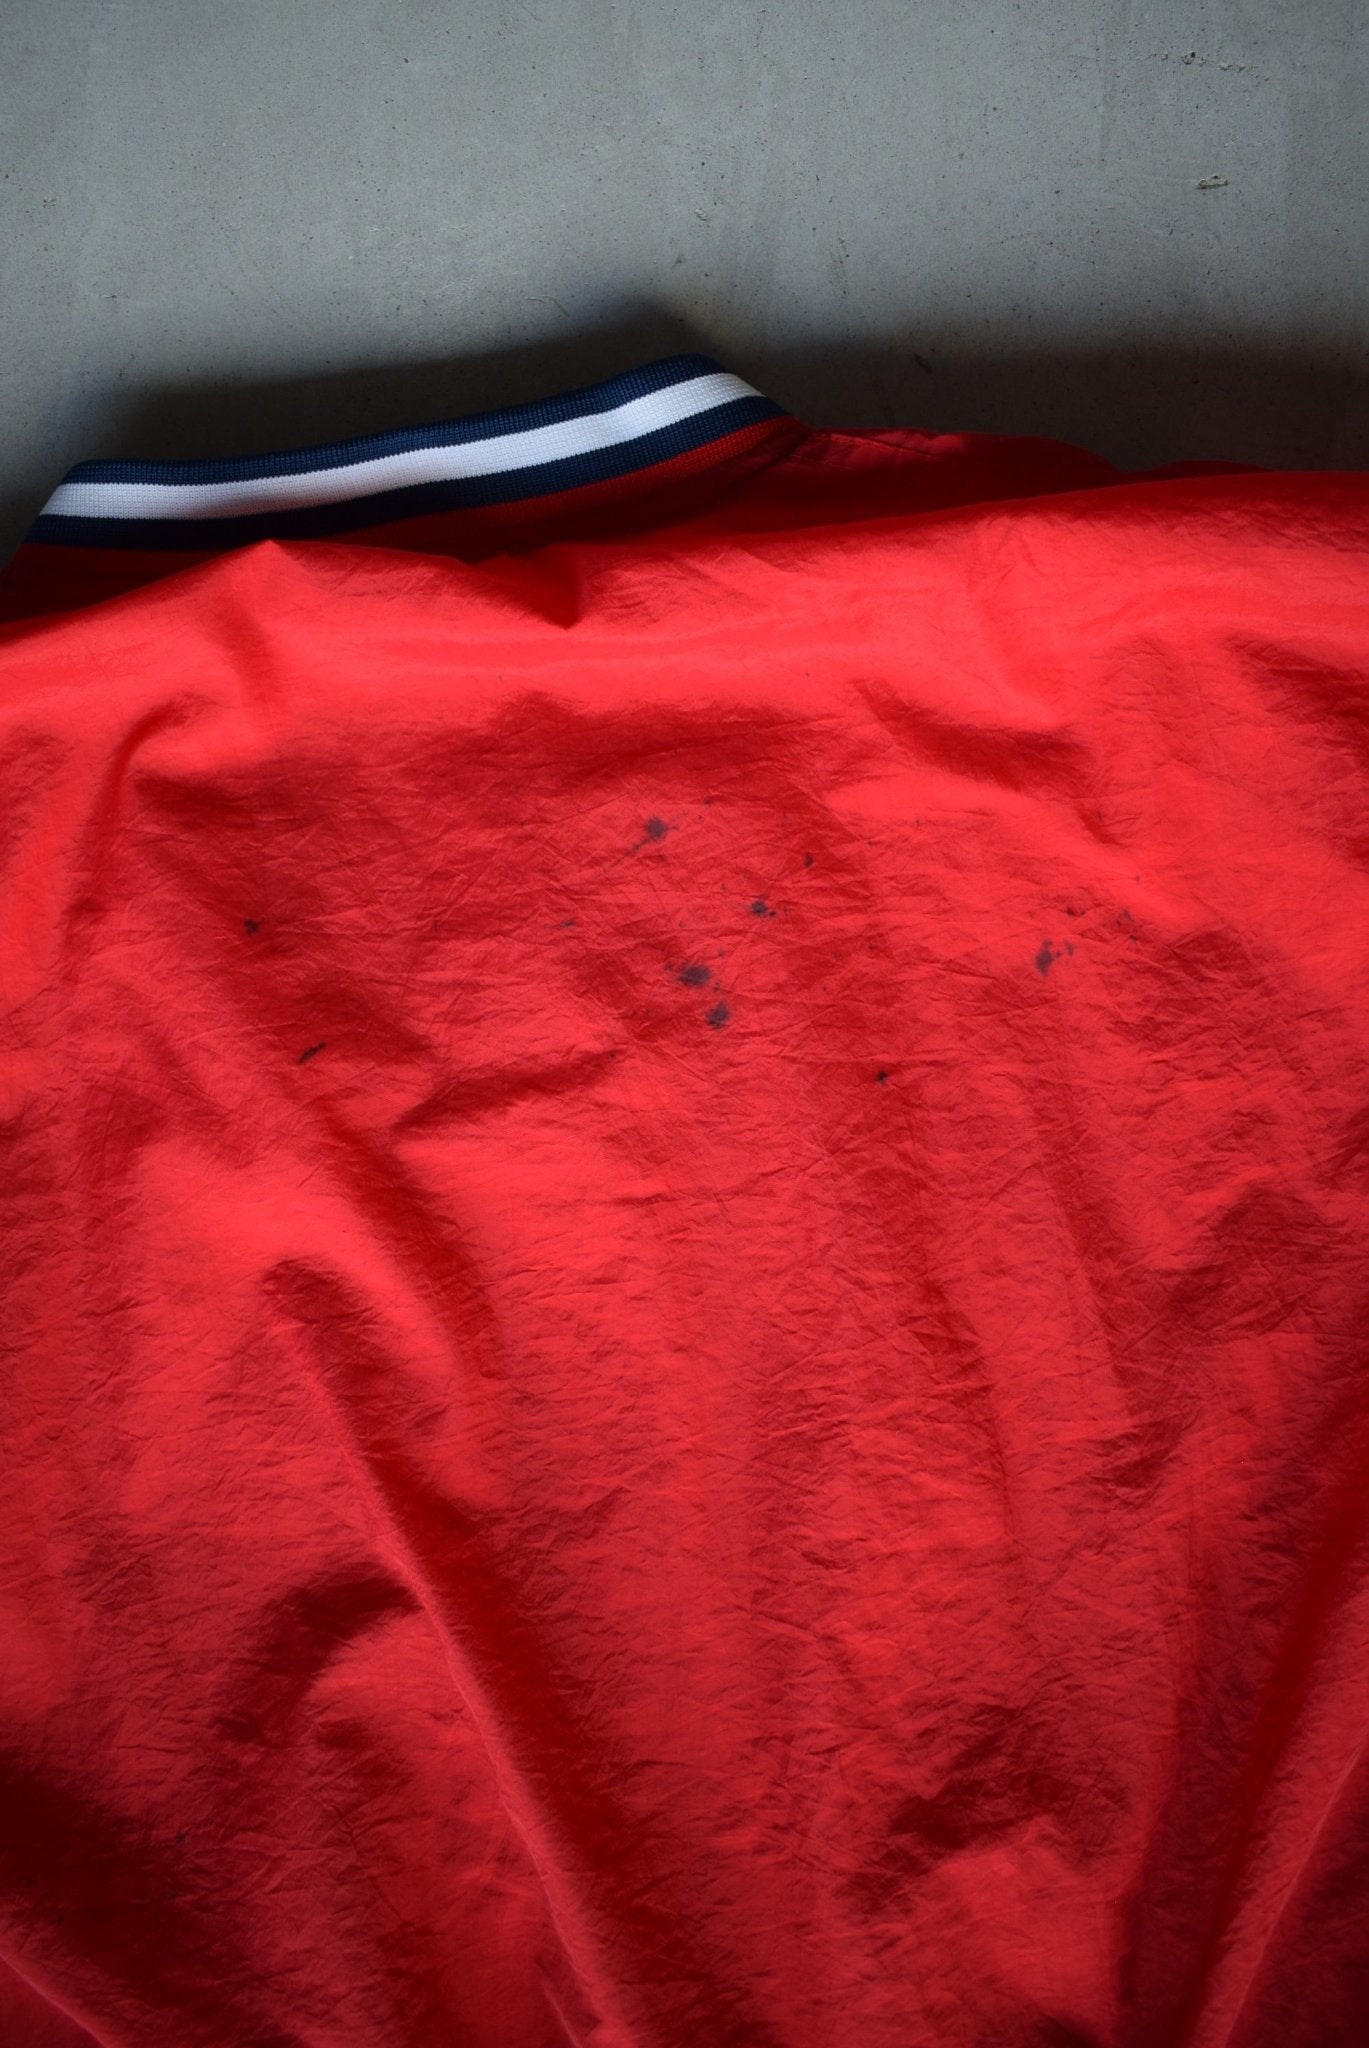 Vintage Starter x MLB St. Louis Cardinals Pullover Jacket (M) –  Retrospective Store